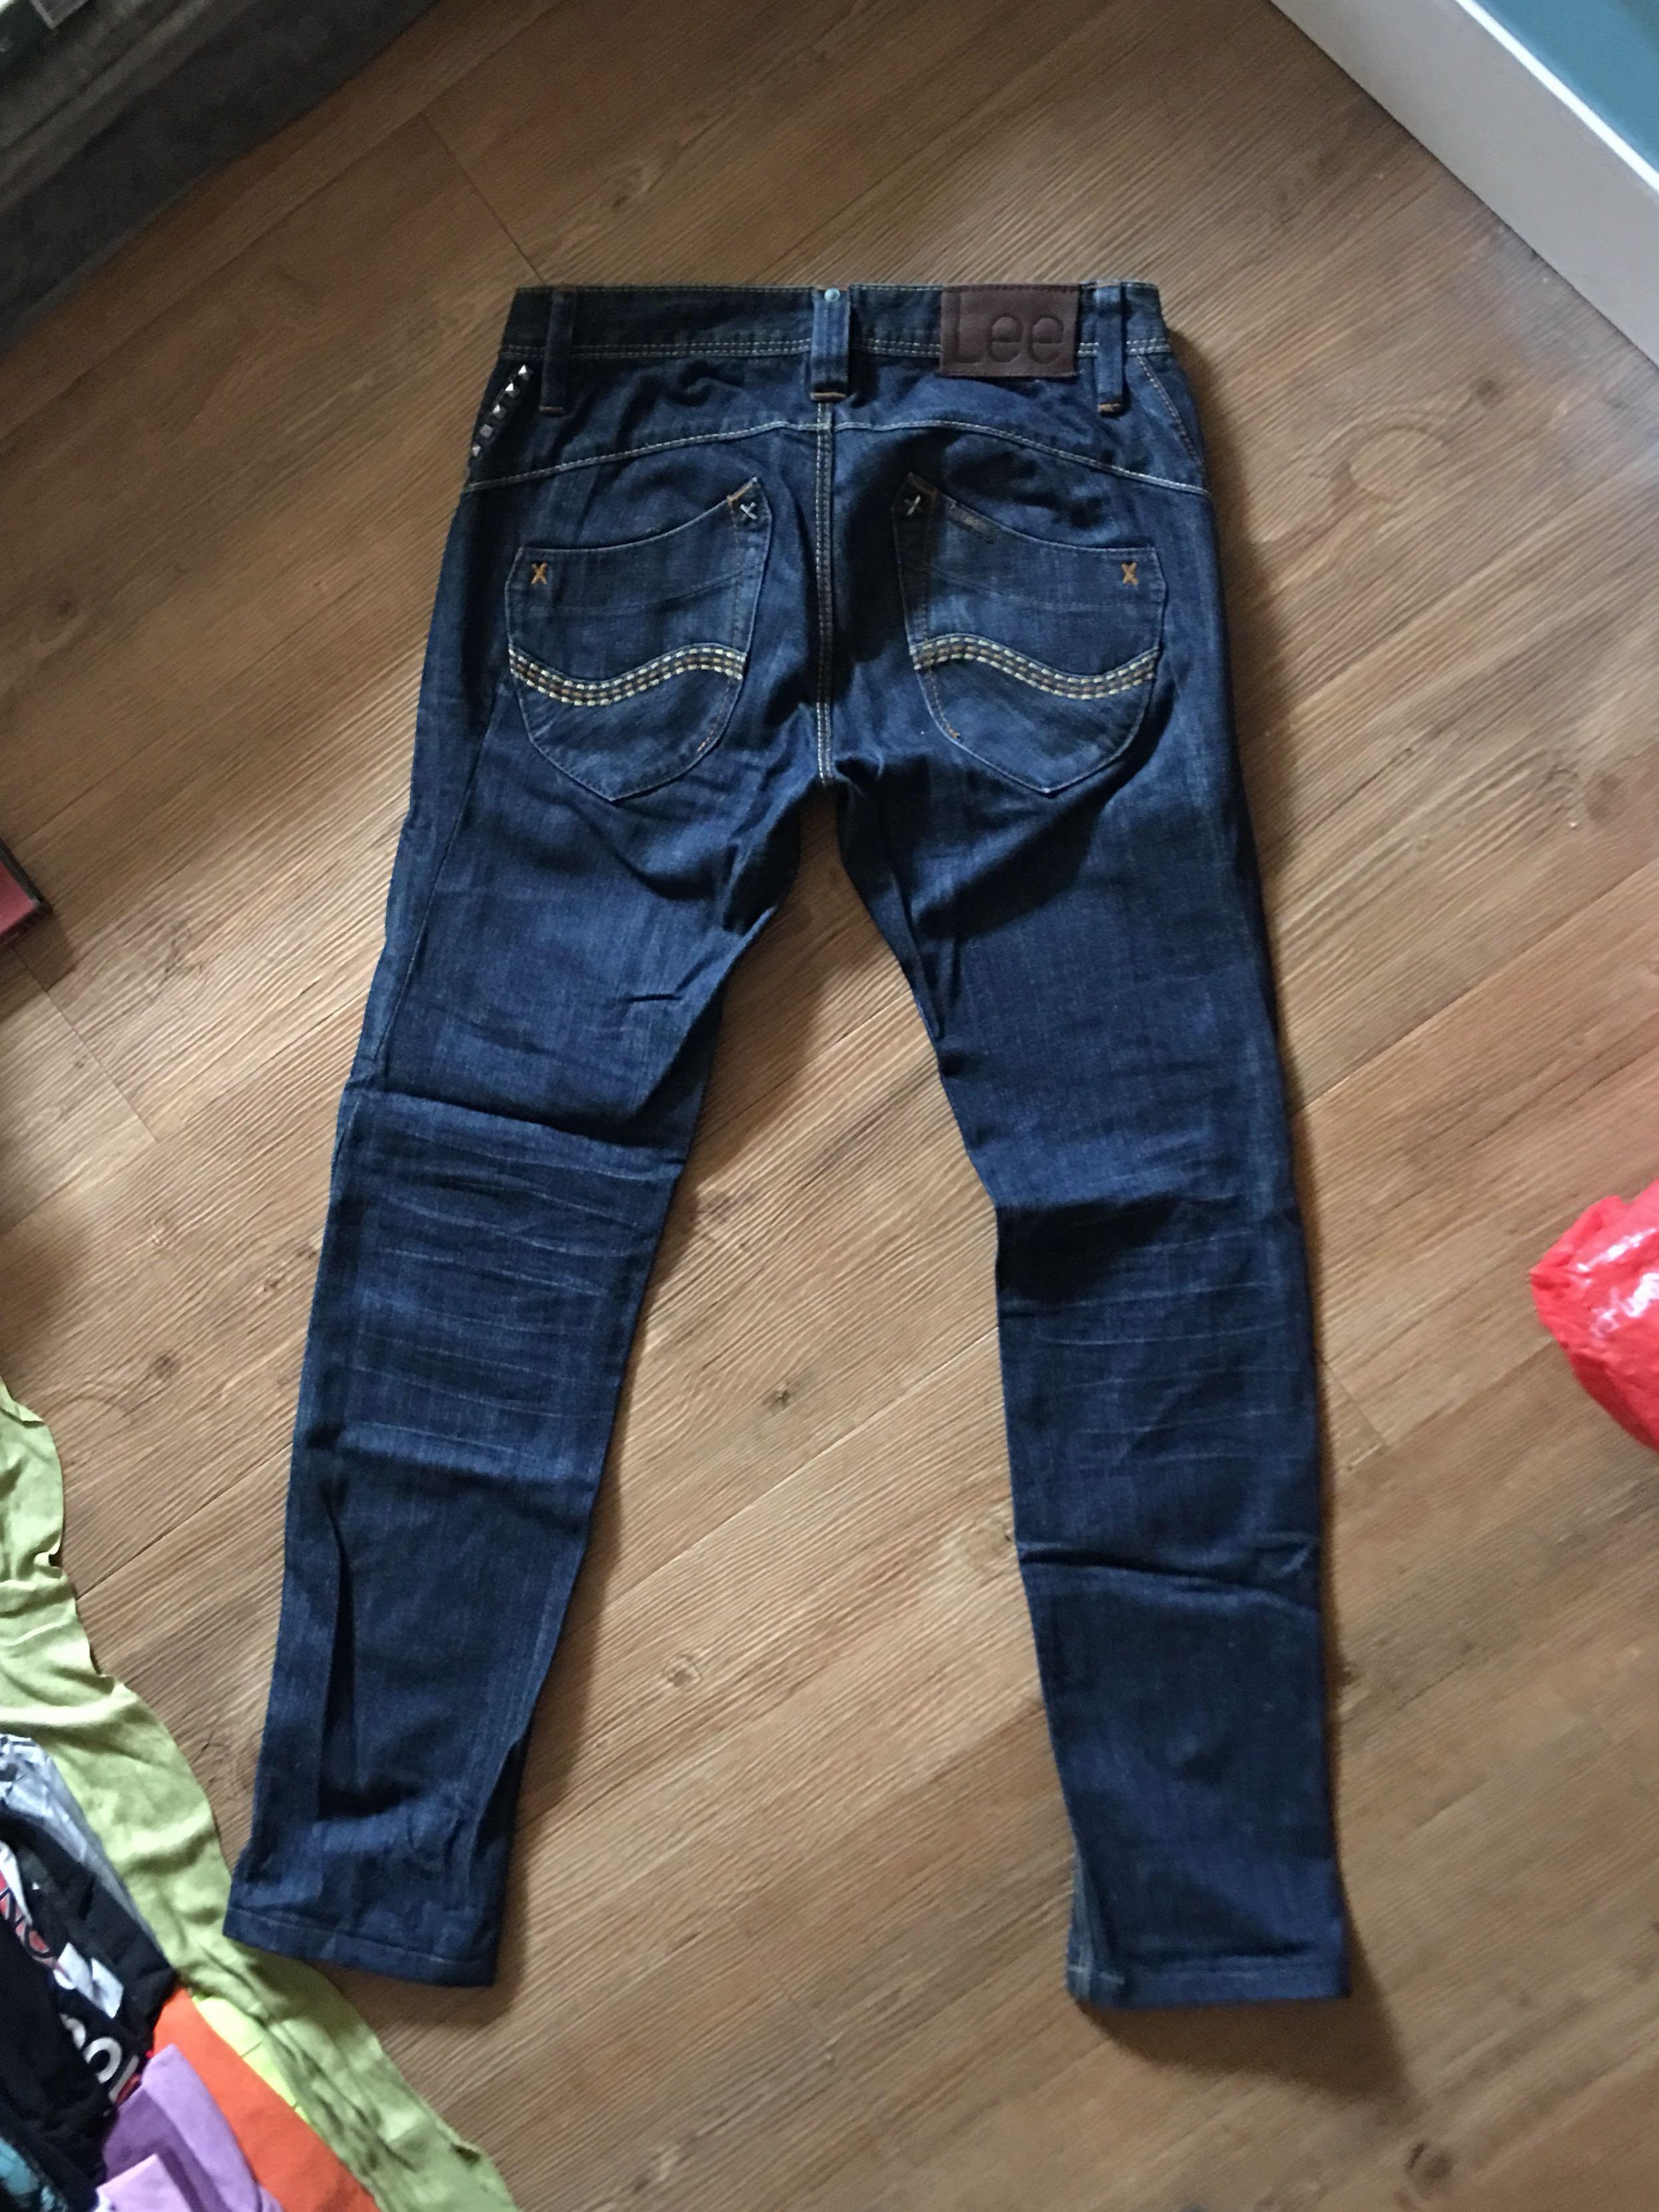 x blue jeans price